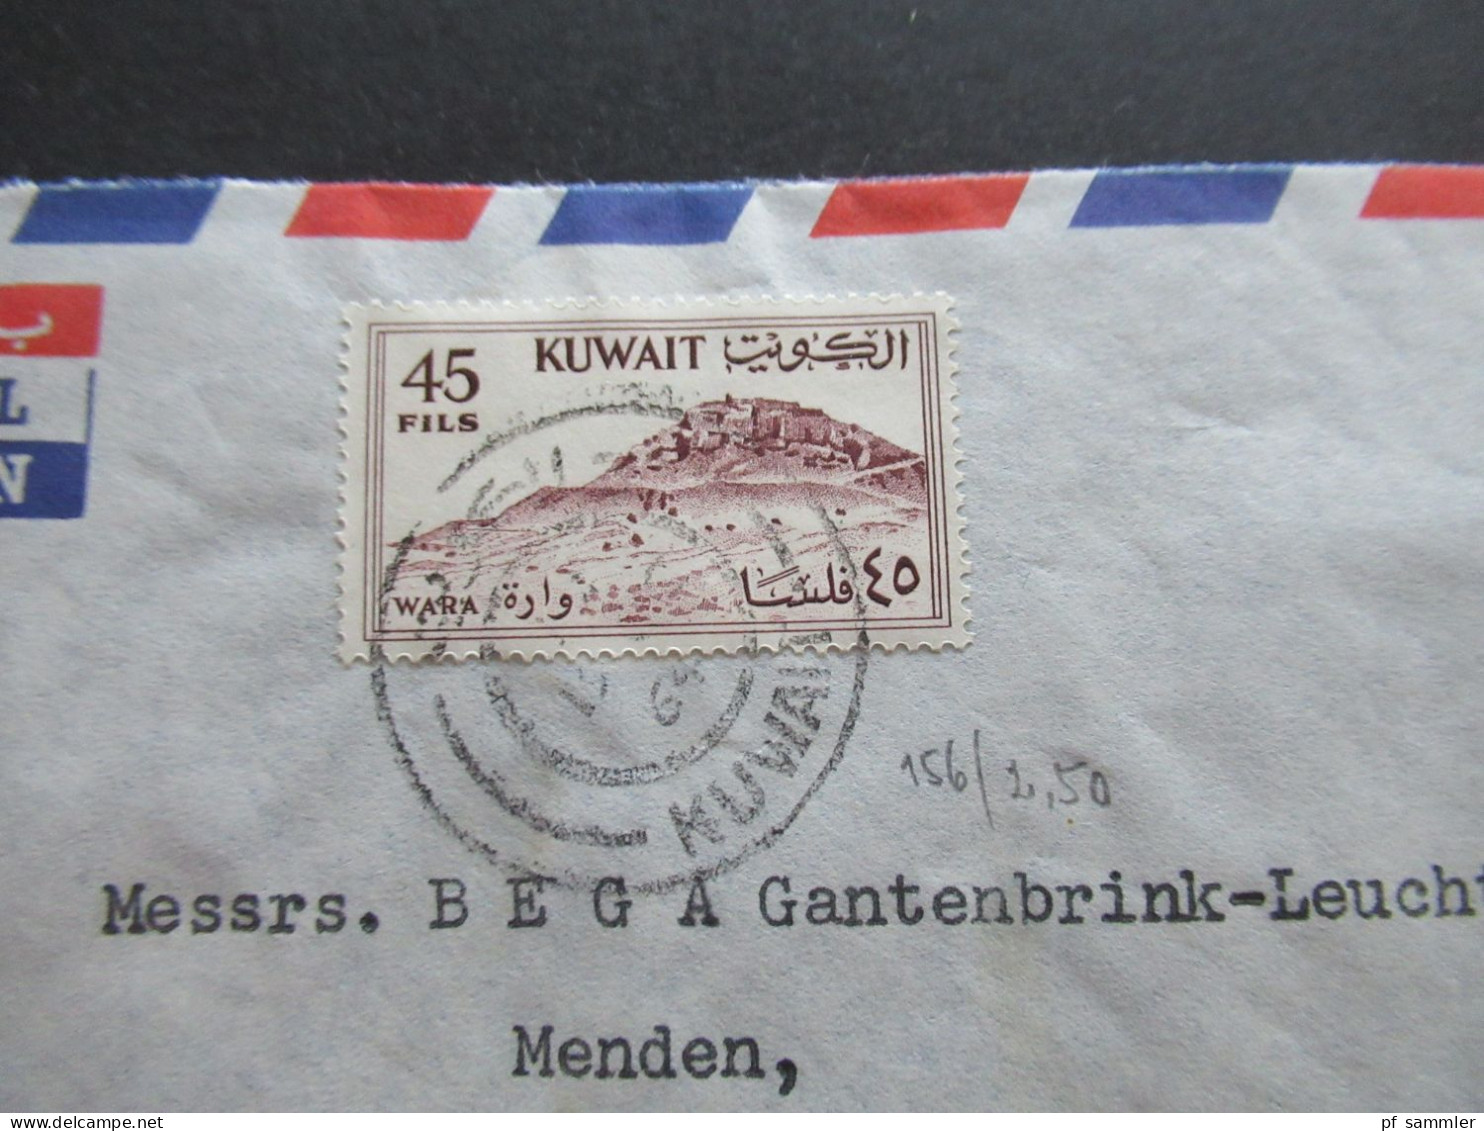 Asien Kuwait 1964 8 Belege Air Mail / Luftpost auch Firmenumschläge Electrical Contracting Company Nafisi & Farouki